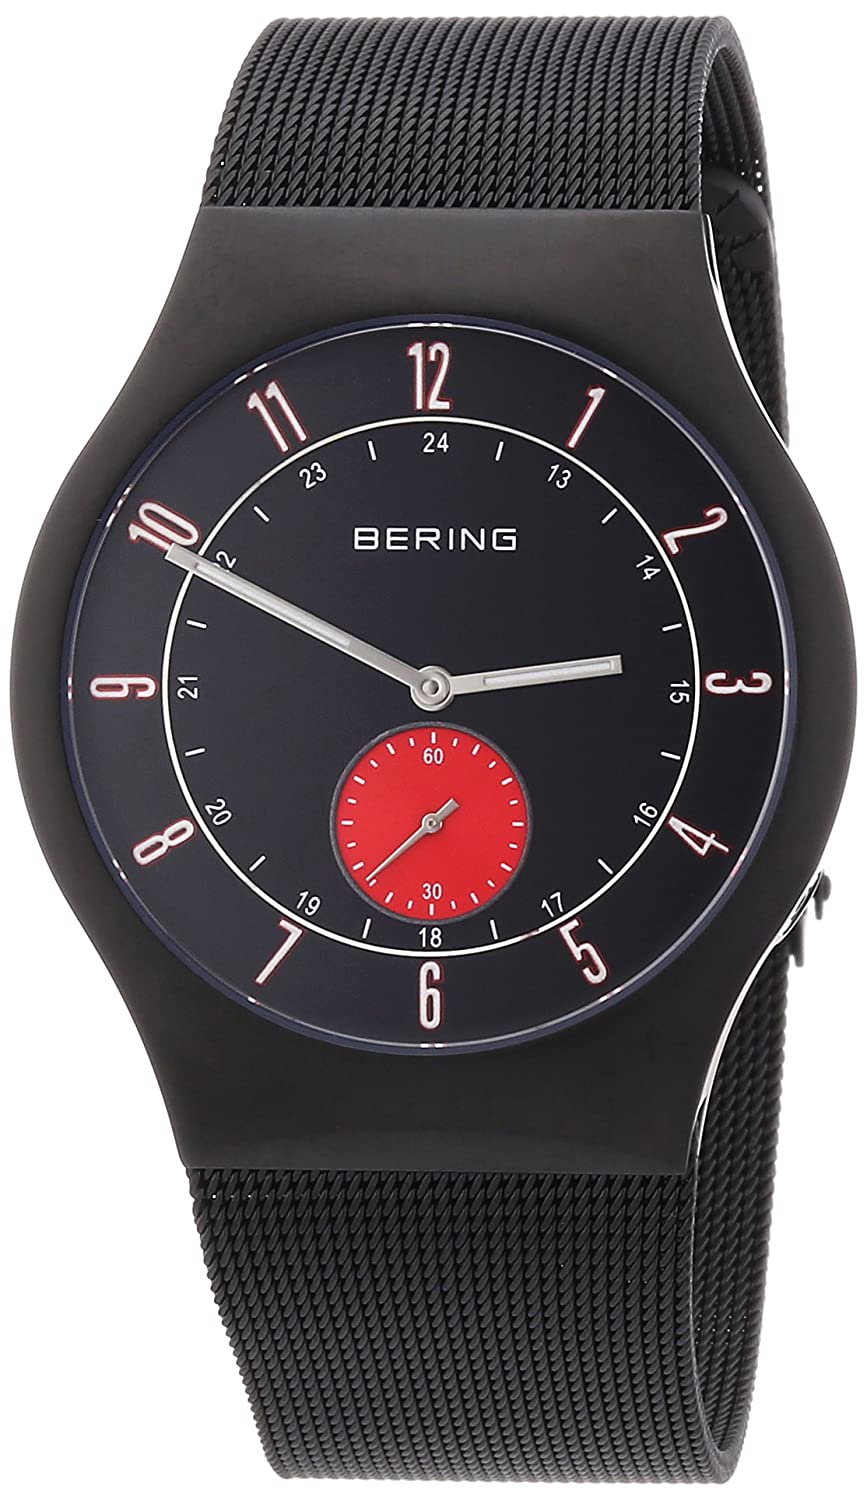 Bering Funkuhr 51940-229, Black Face, Time Zone, Black Watch, Radio Watch, Analogue Watch